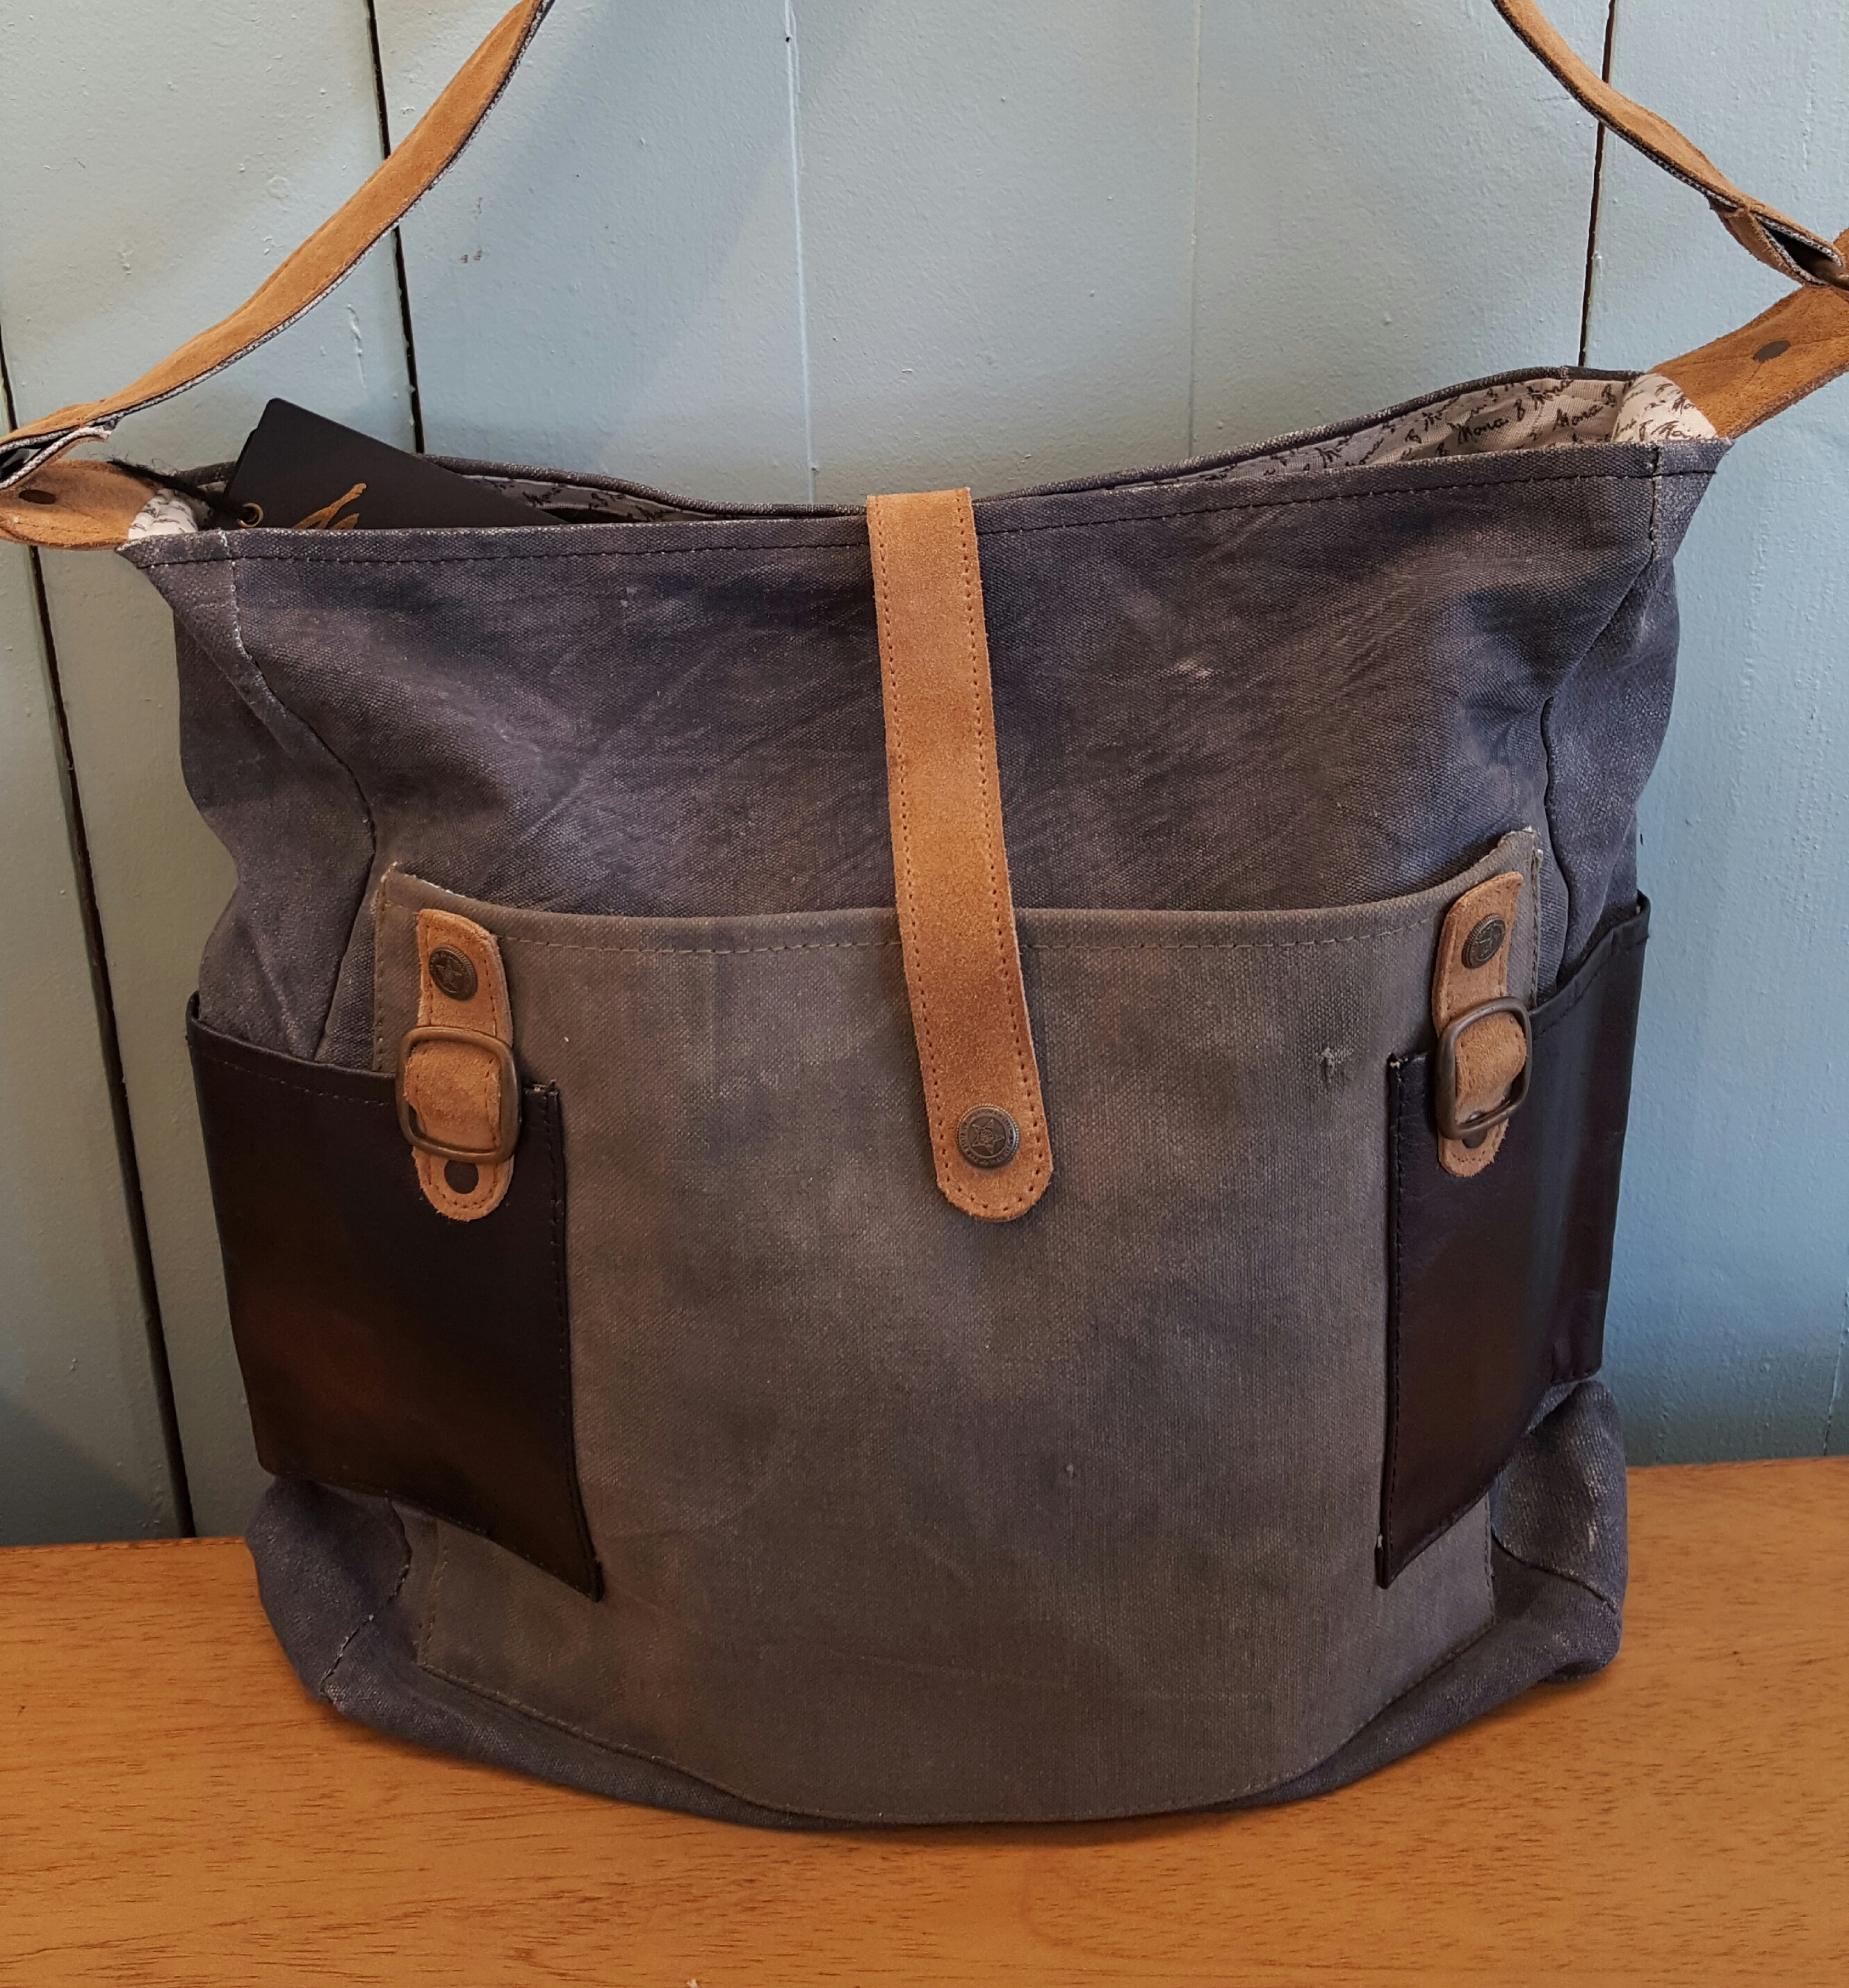 Repurposed Handbags from Mona B – Collections Maui